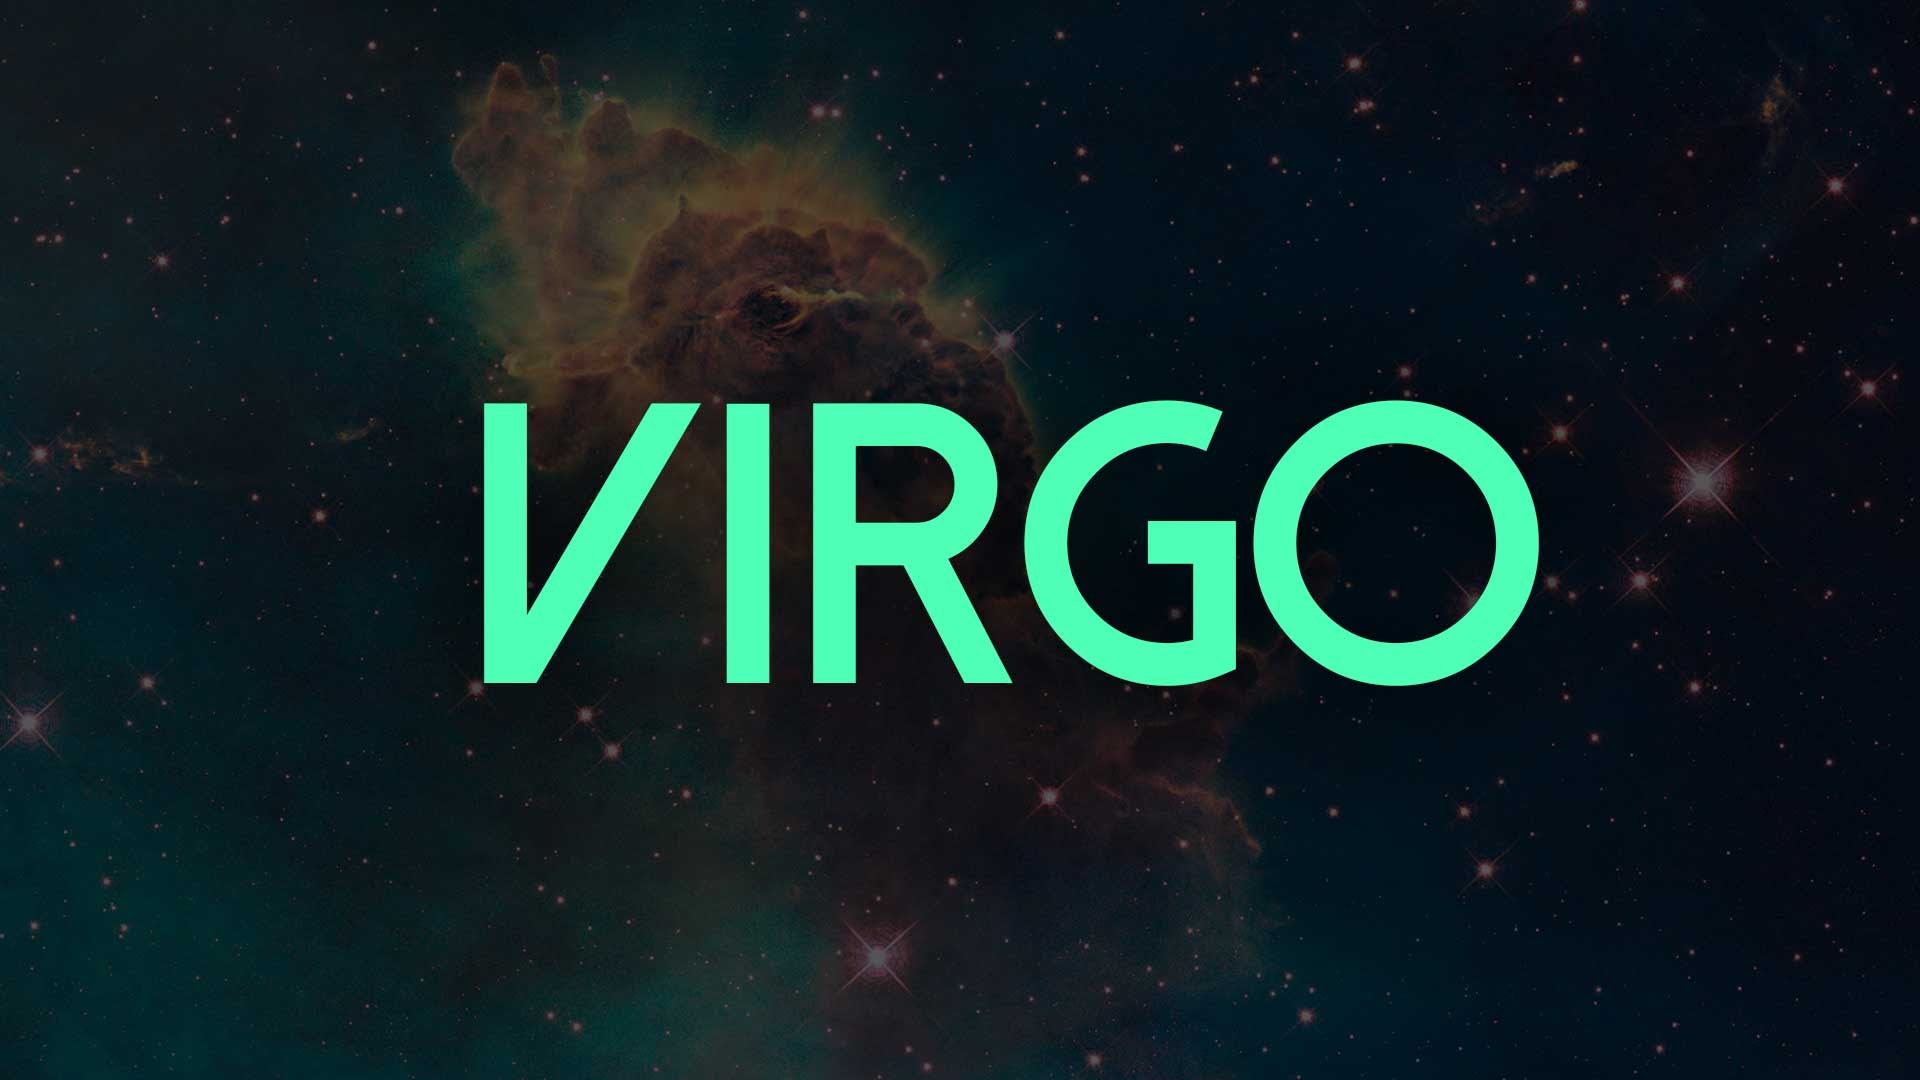 Virgo Puter Themes Desktop Wallpaper Image